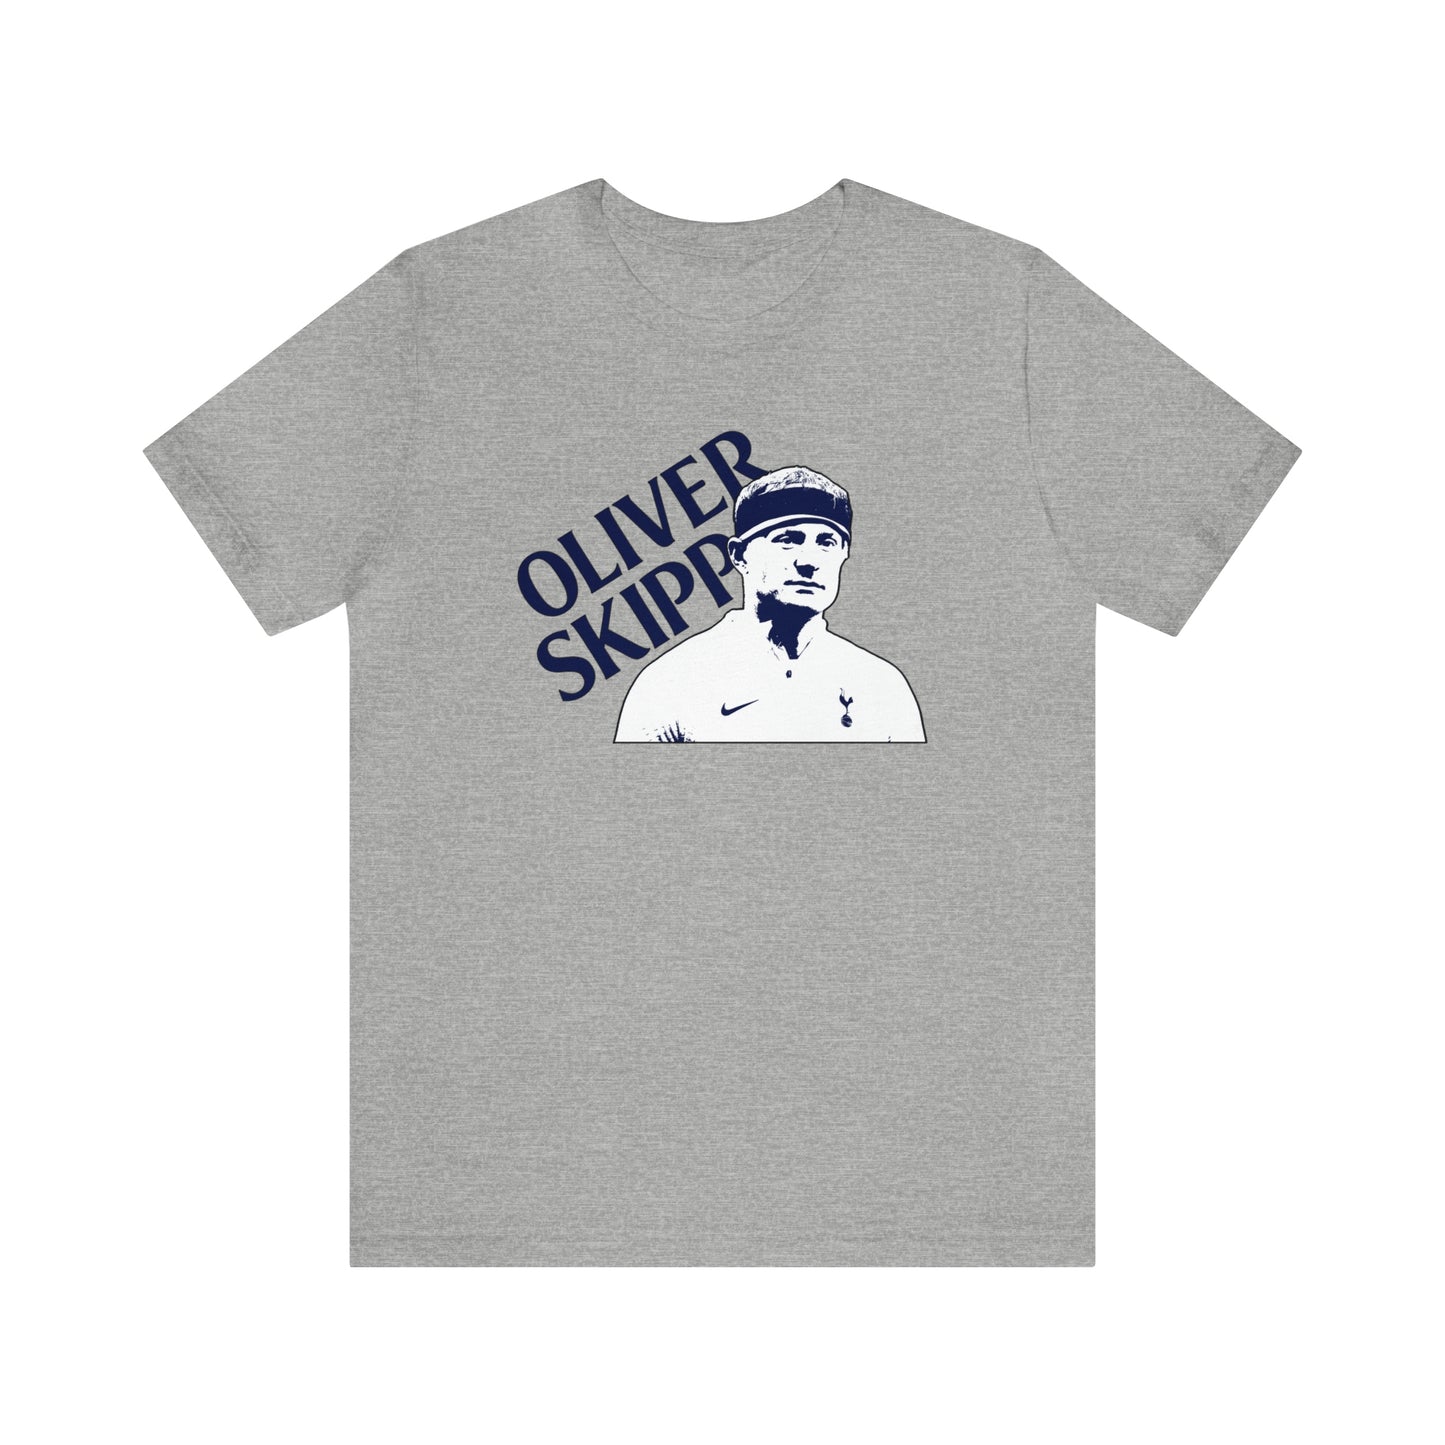 Oliver Skipp Warrior Tottenham Hotspur T-Shirt